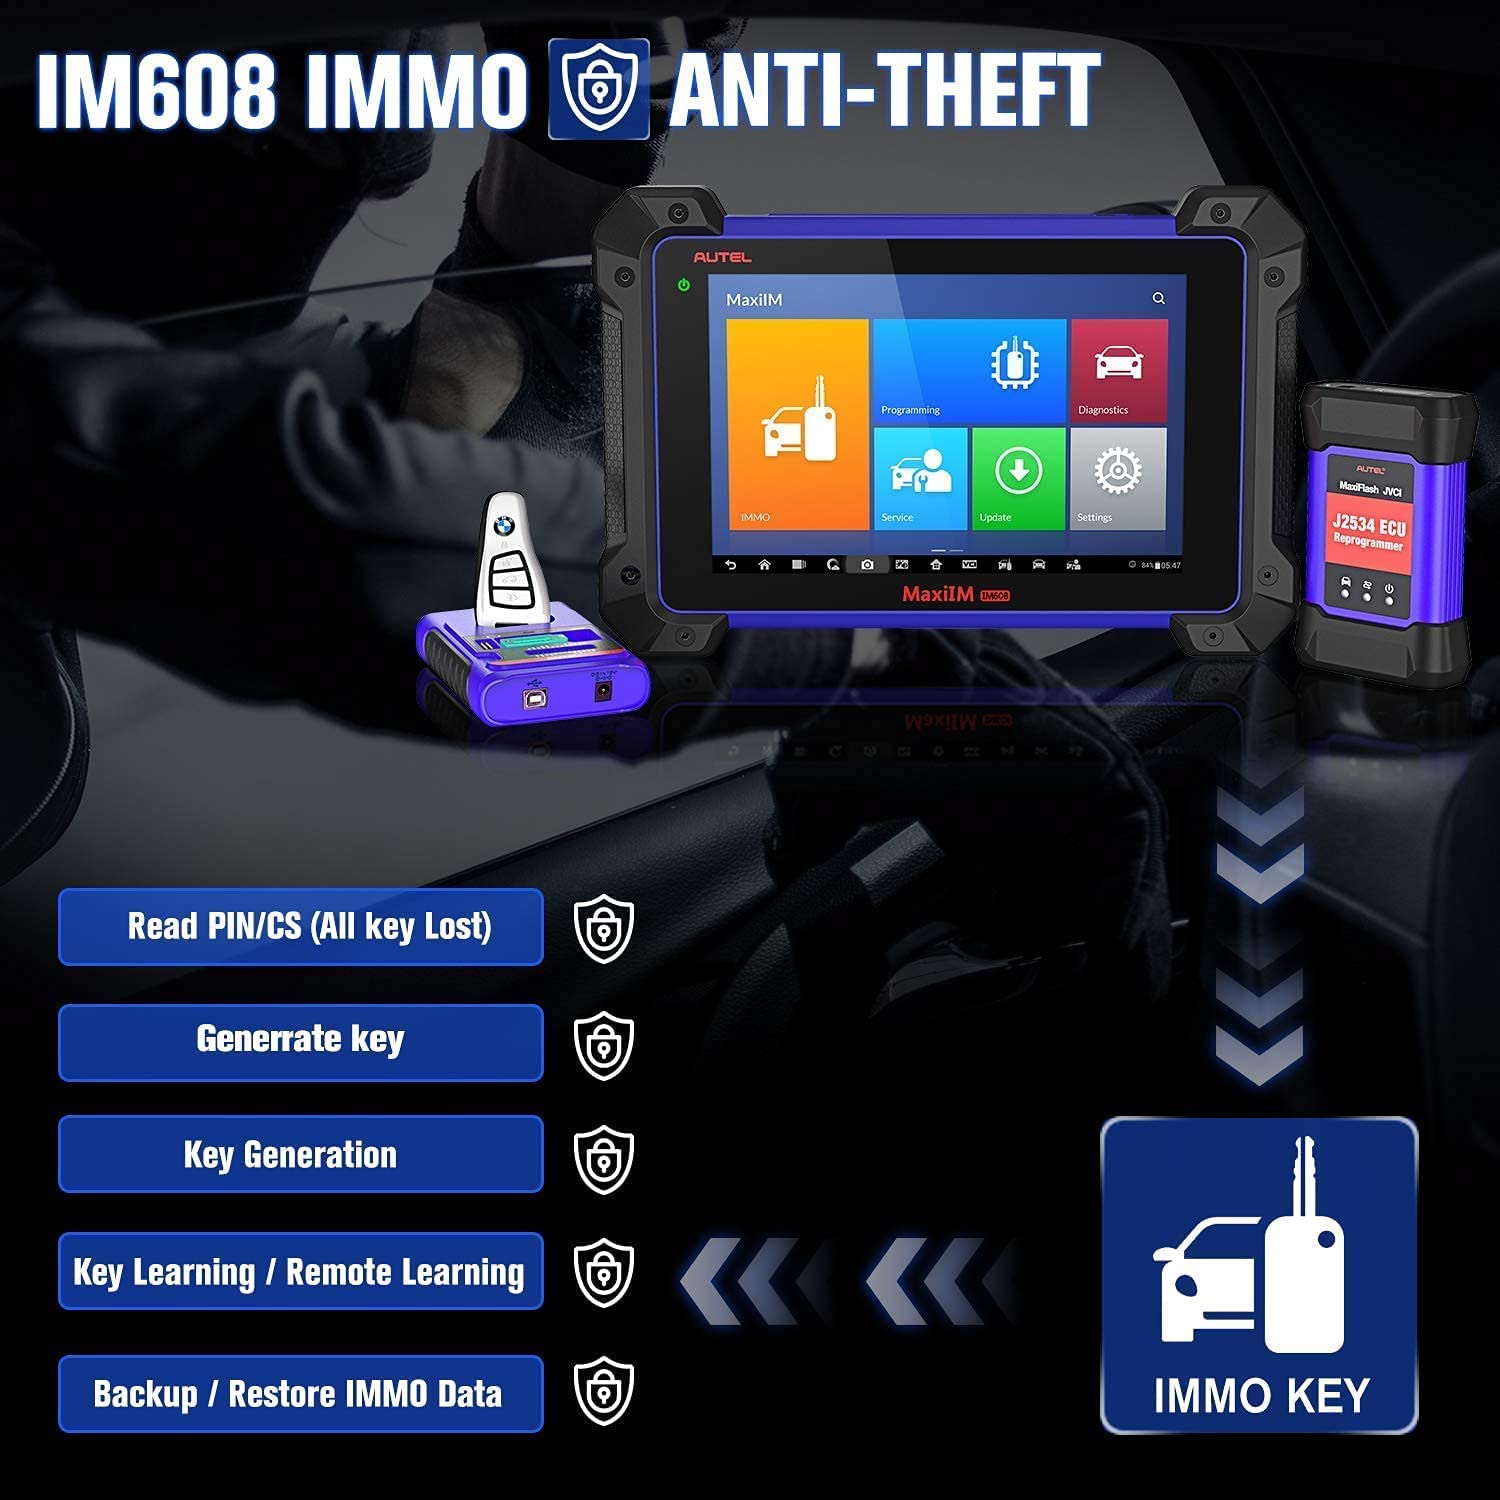 Autel MaxiIM IM608 key programmer has IMMO and Anti-Theft